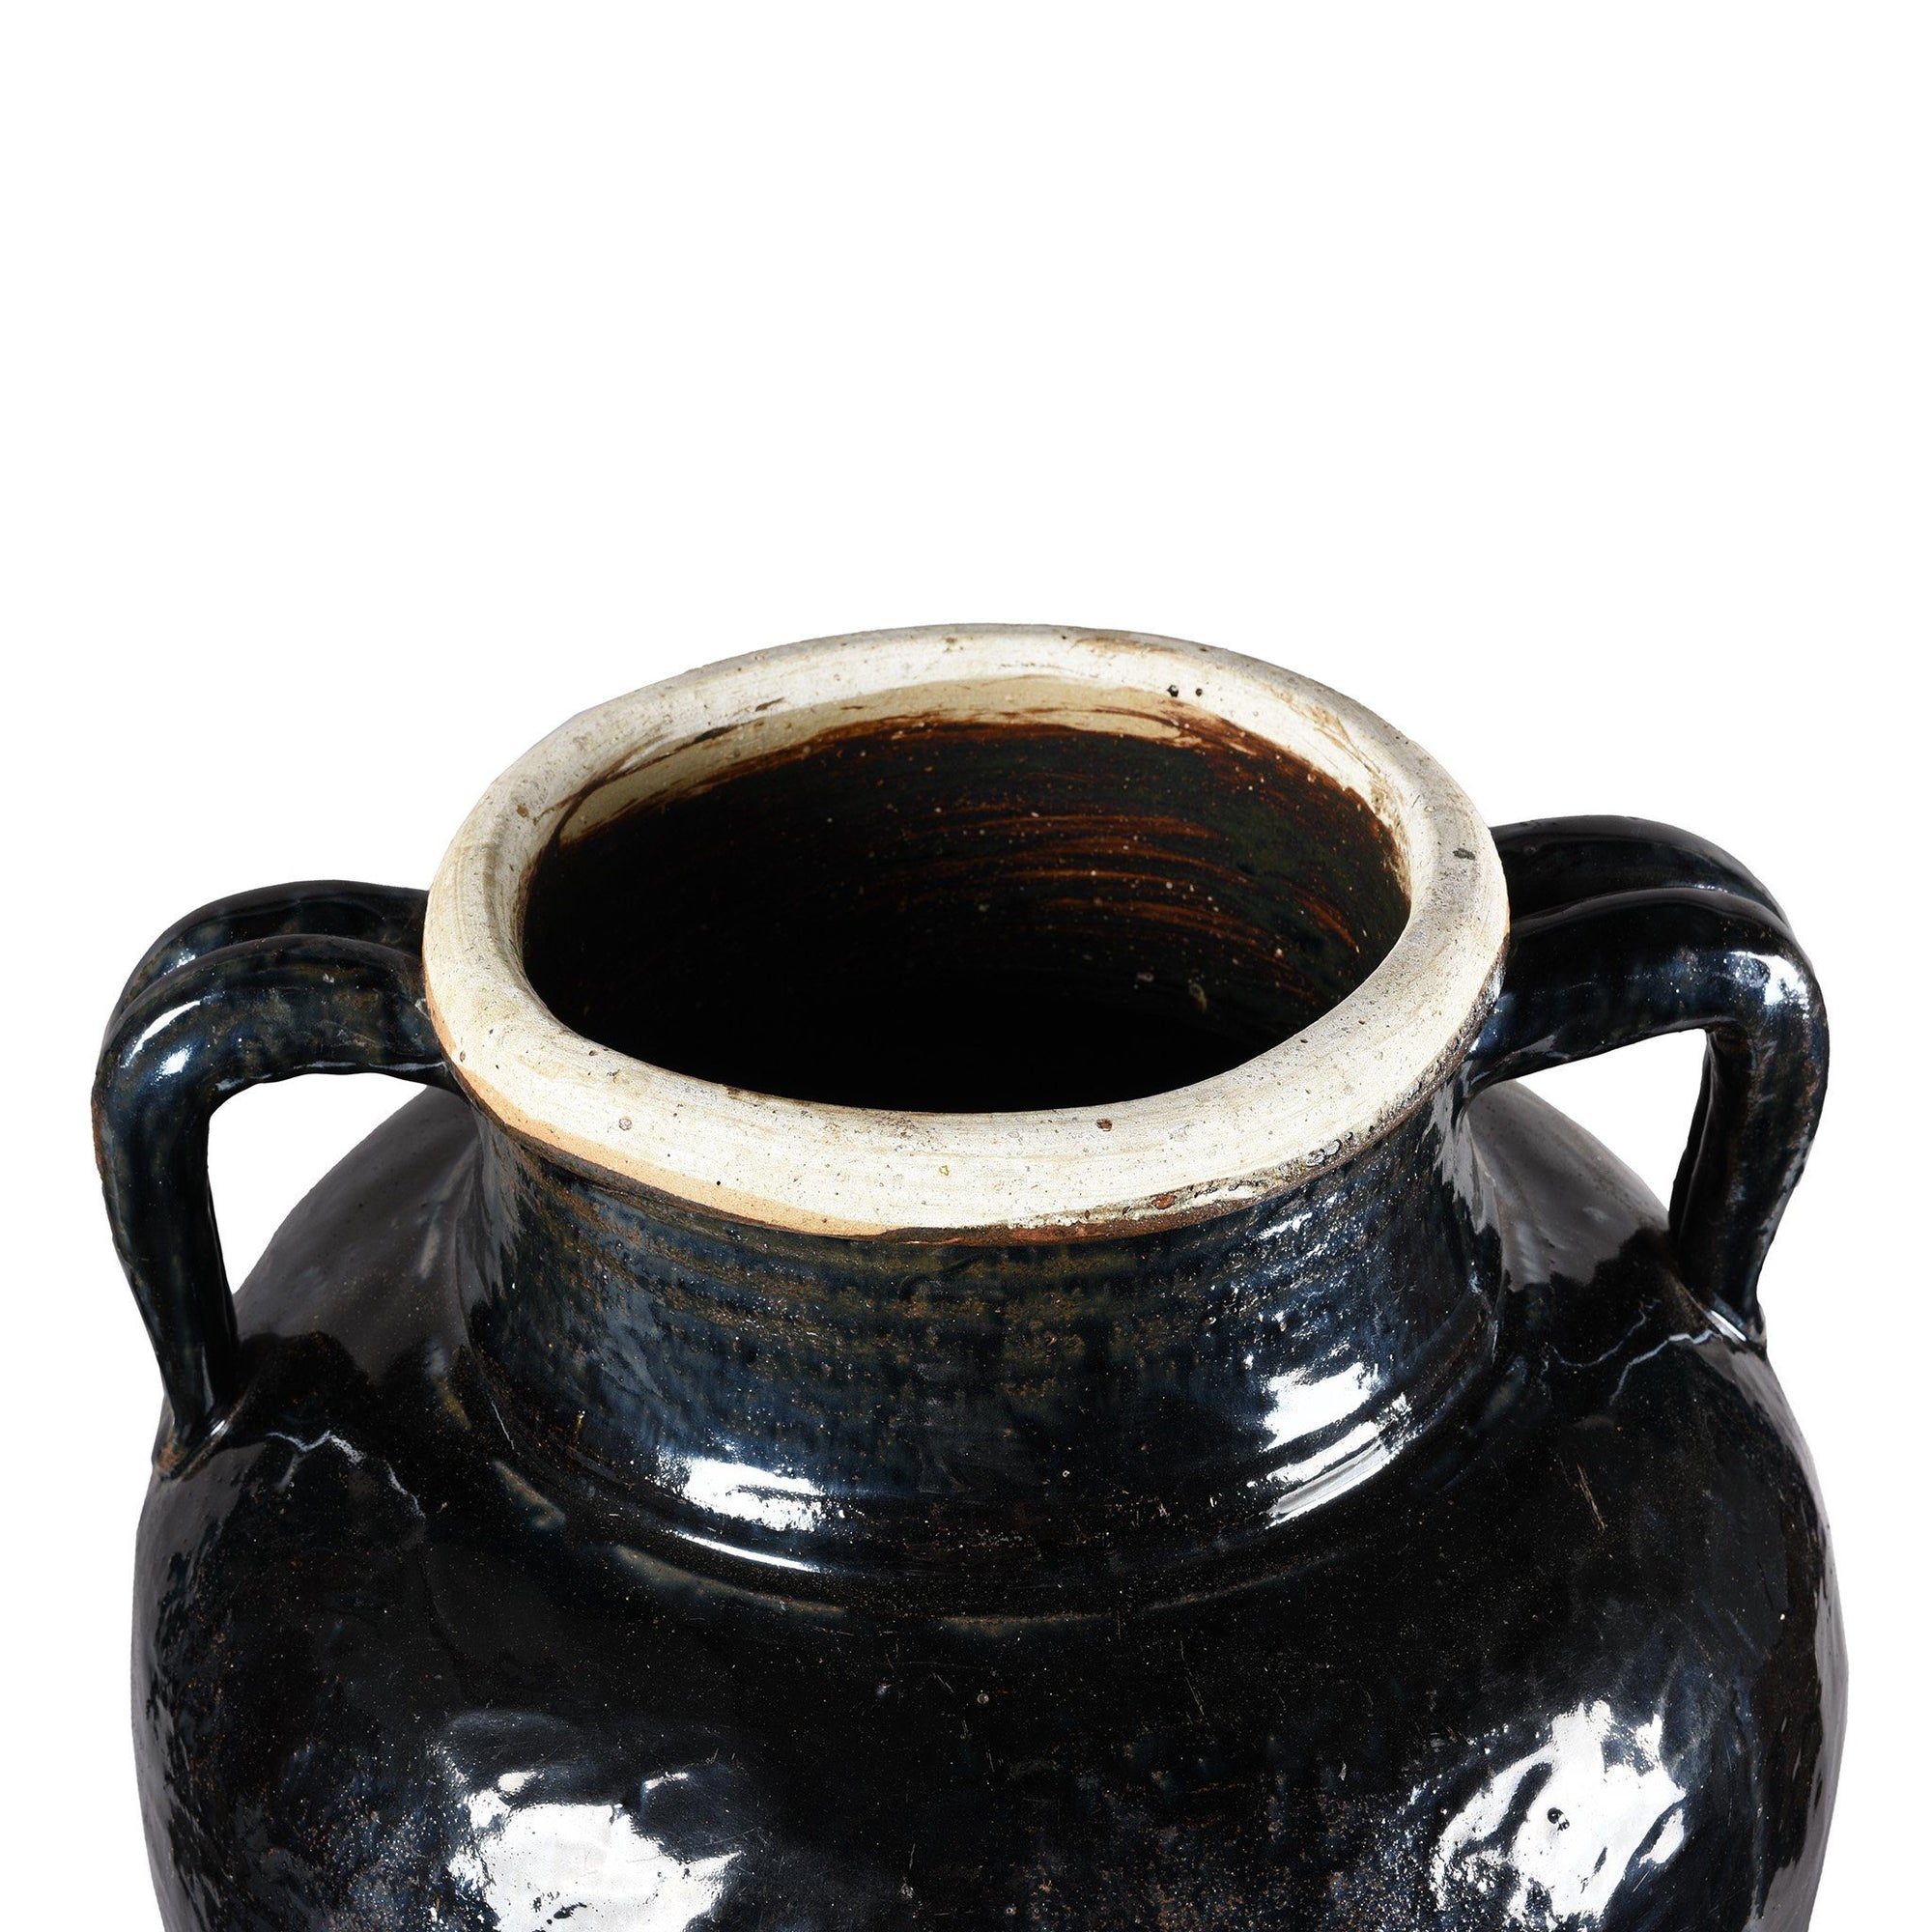 Black Glazed Wine Jar From Shanxi - 19thC | Indigo Antiques